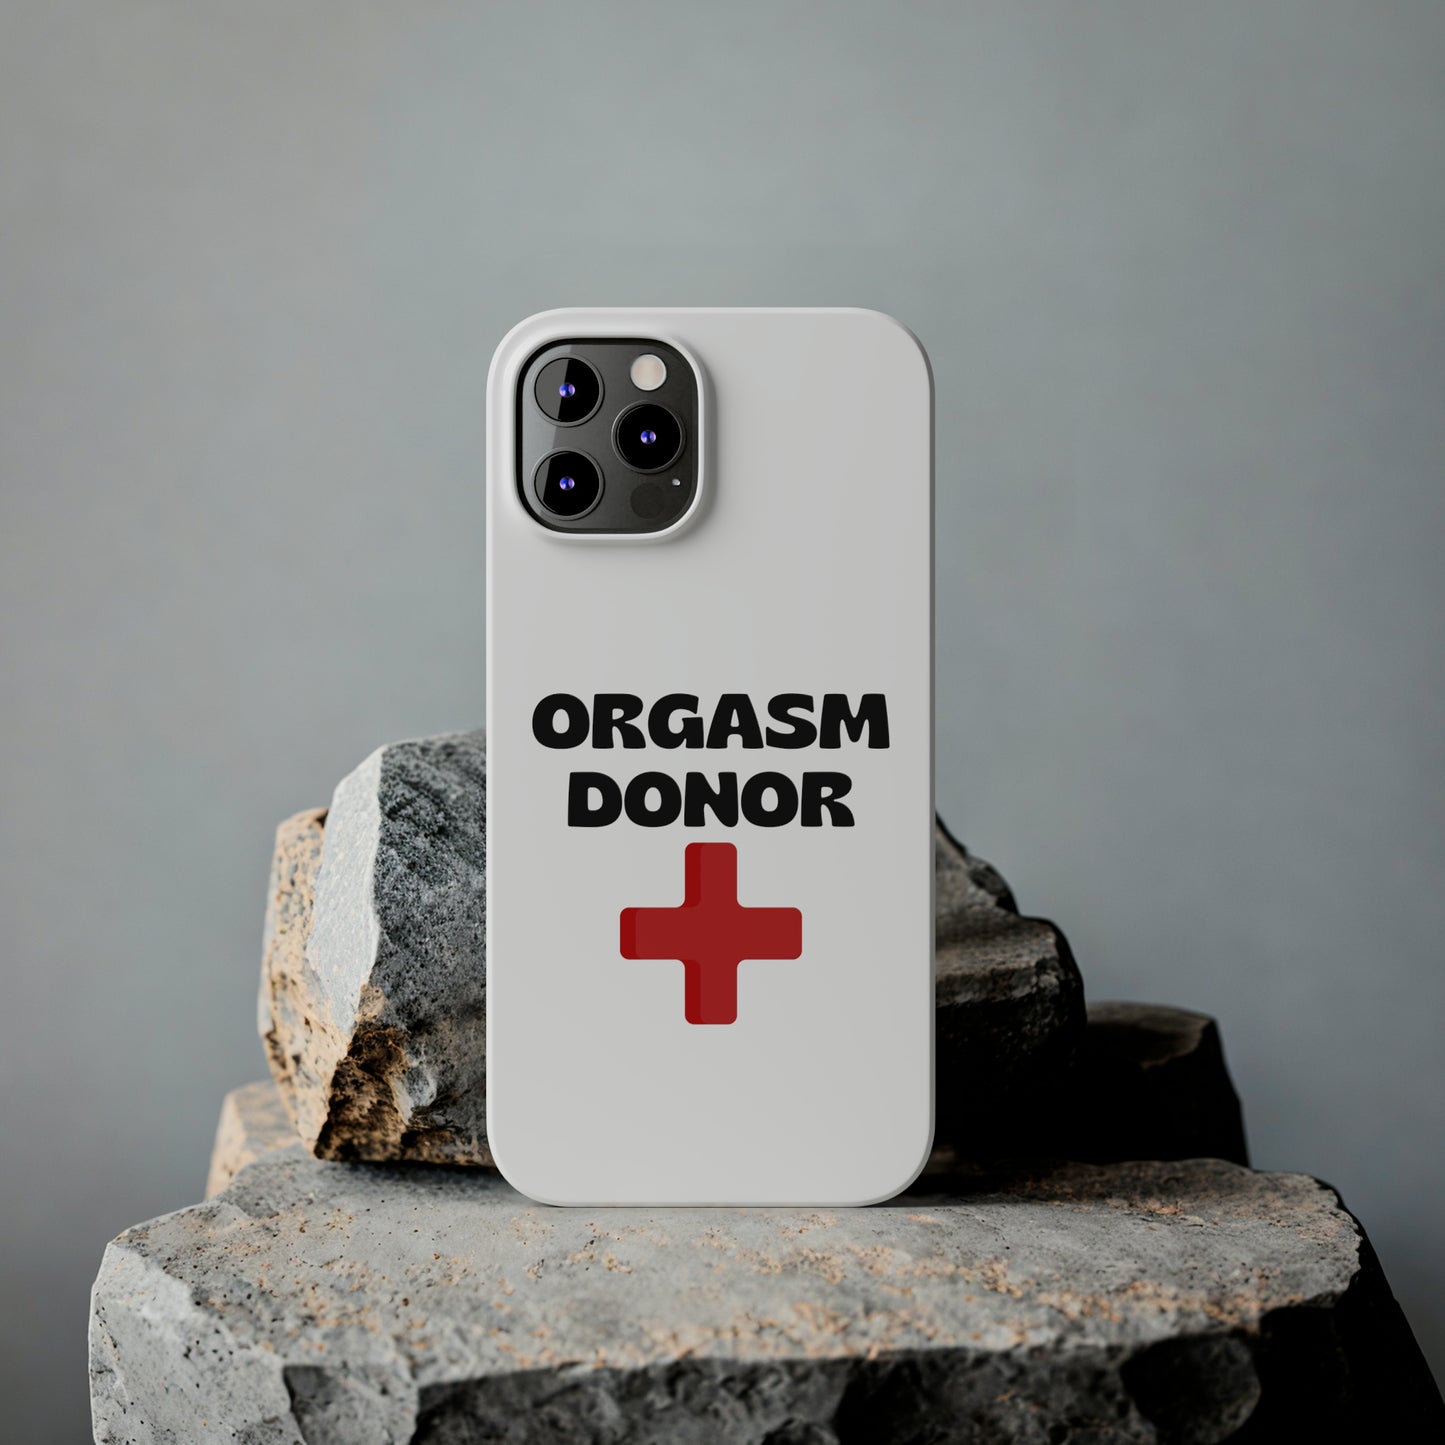 Orgasm Donor iPhone Case